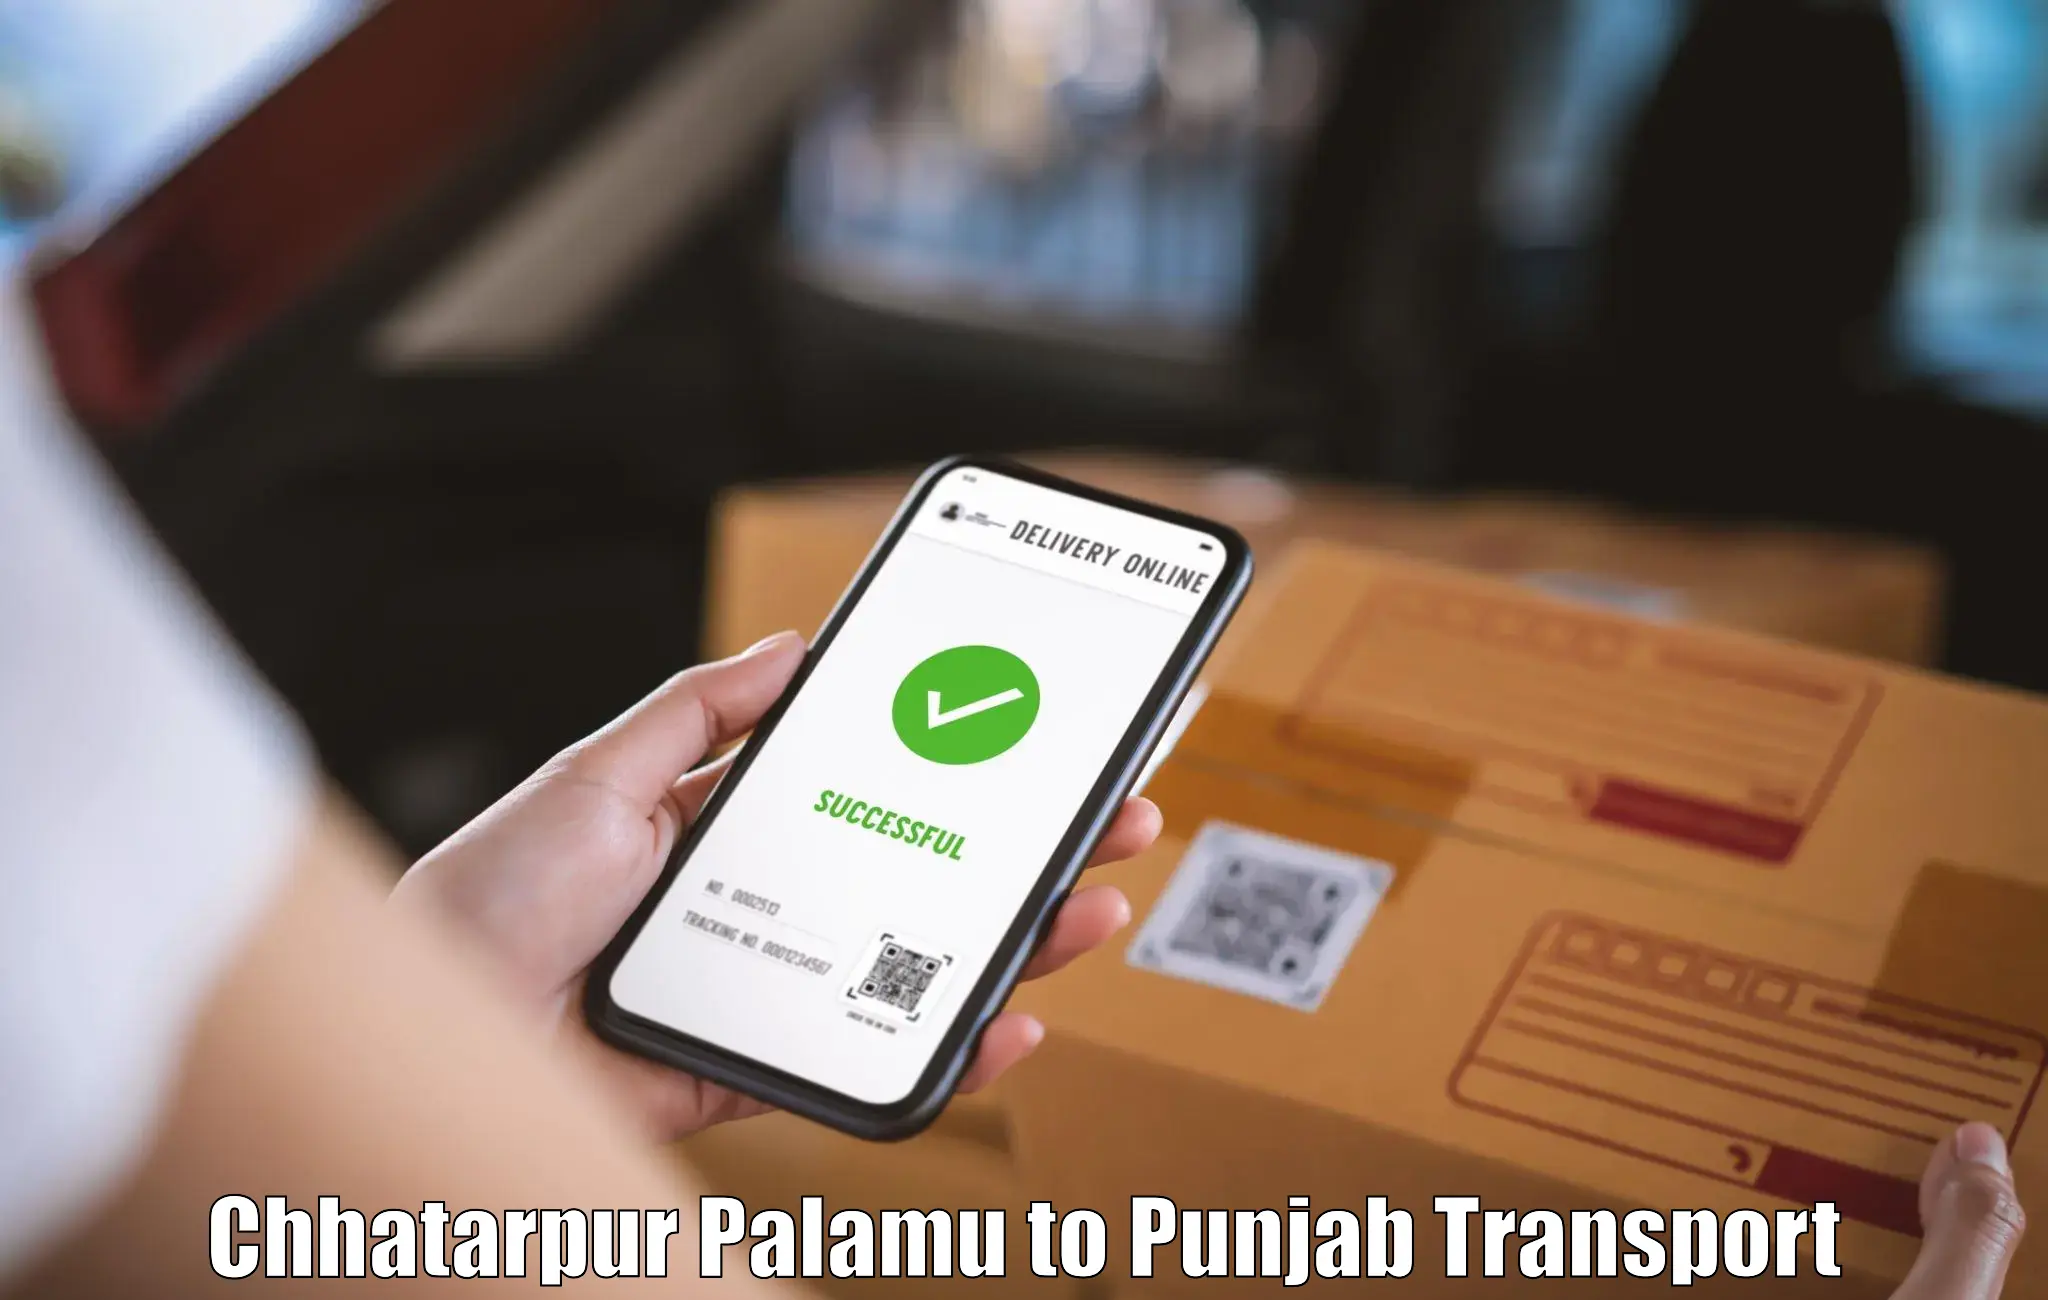 Lorry transport service Chhatarpur Palamu to Kapurthala